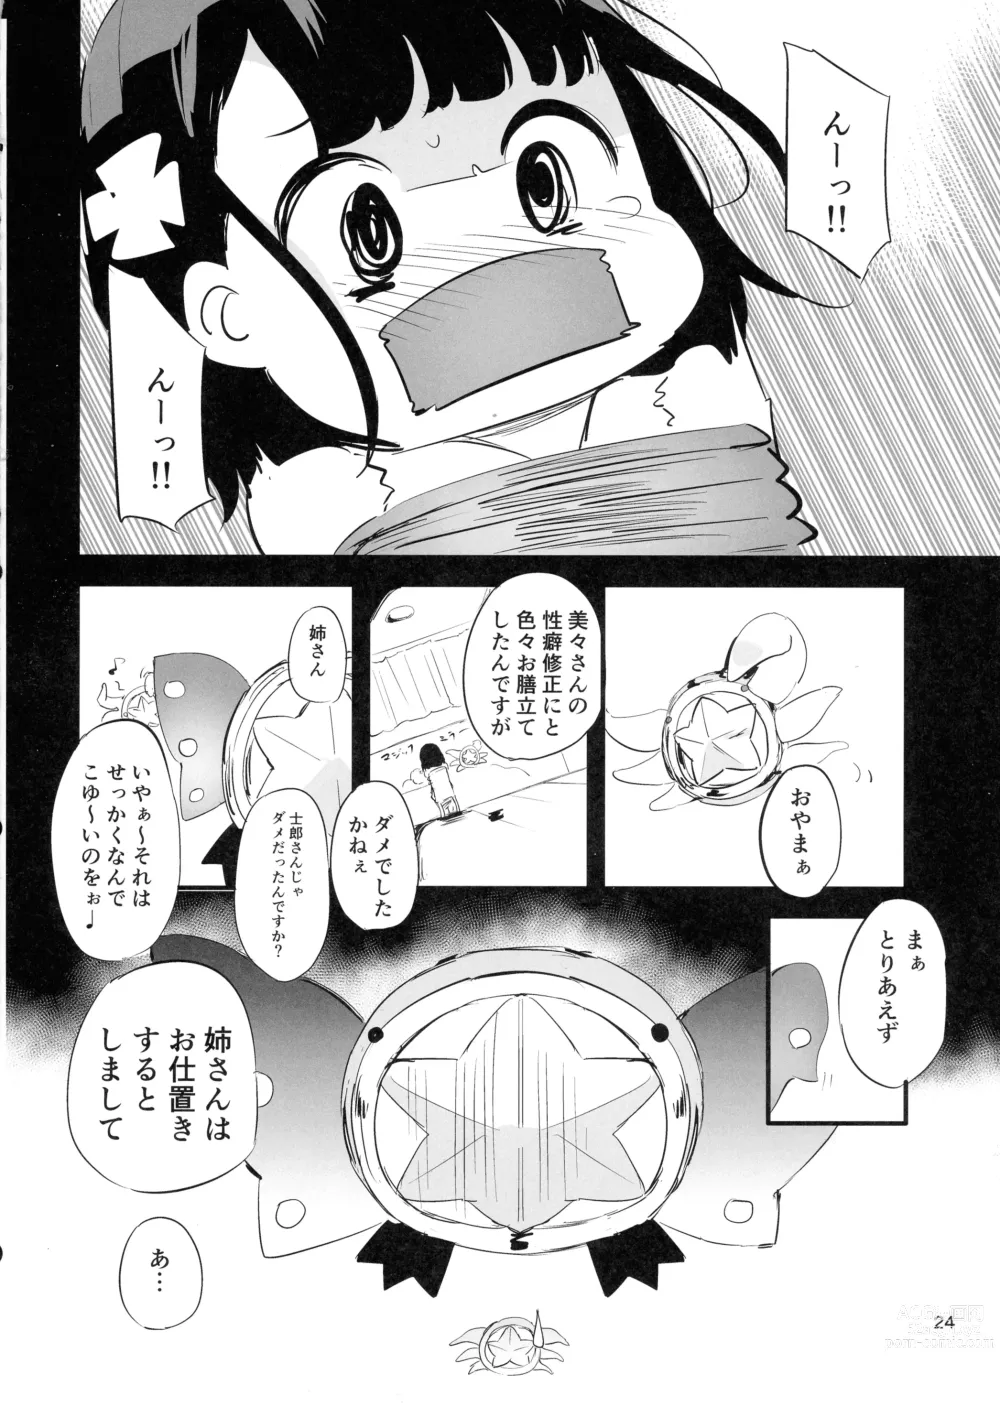 Page 24 of doujinshi Soaprisma